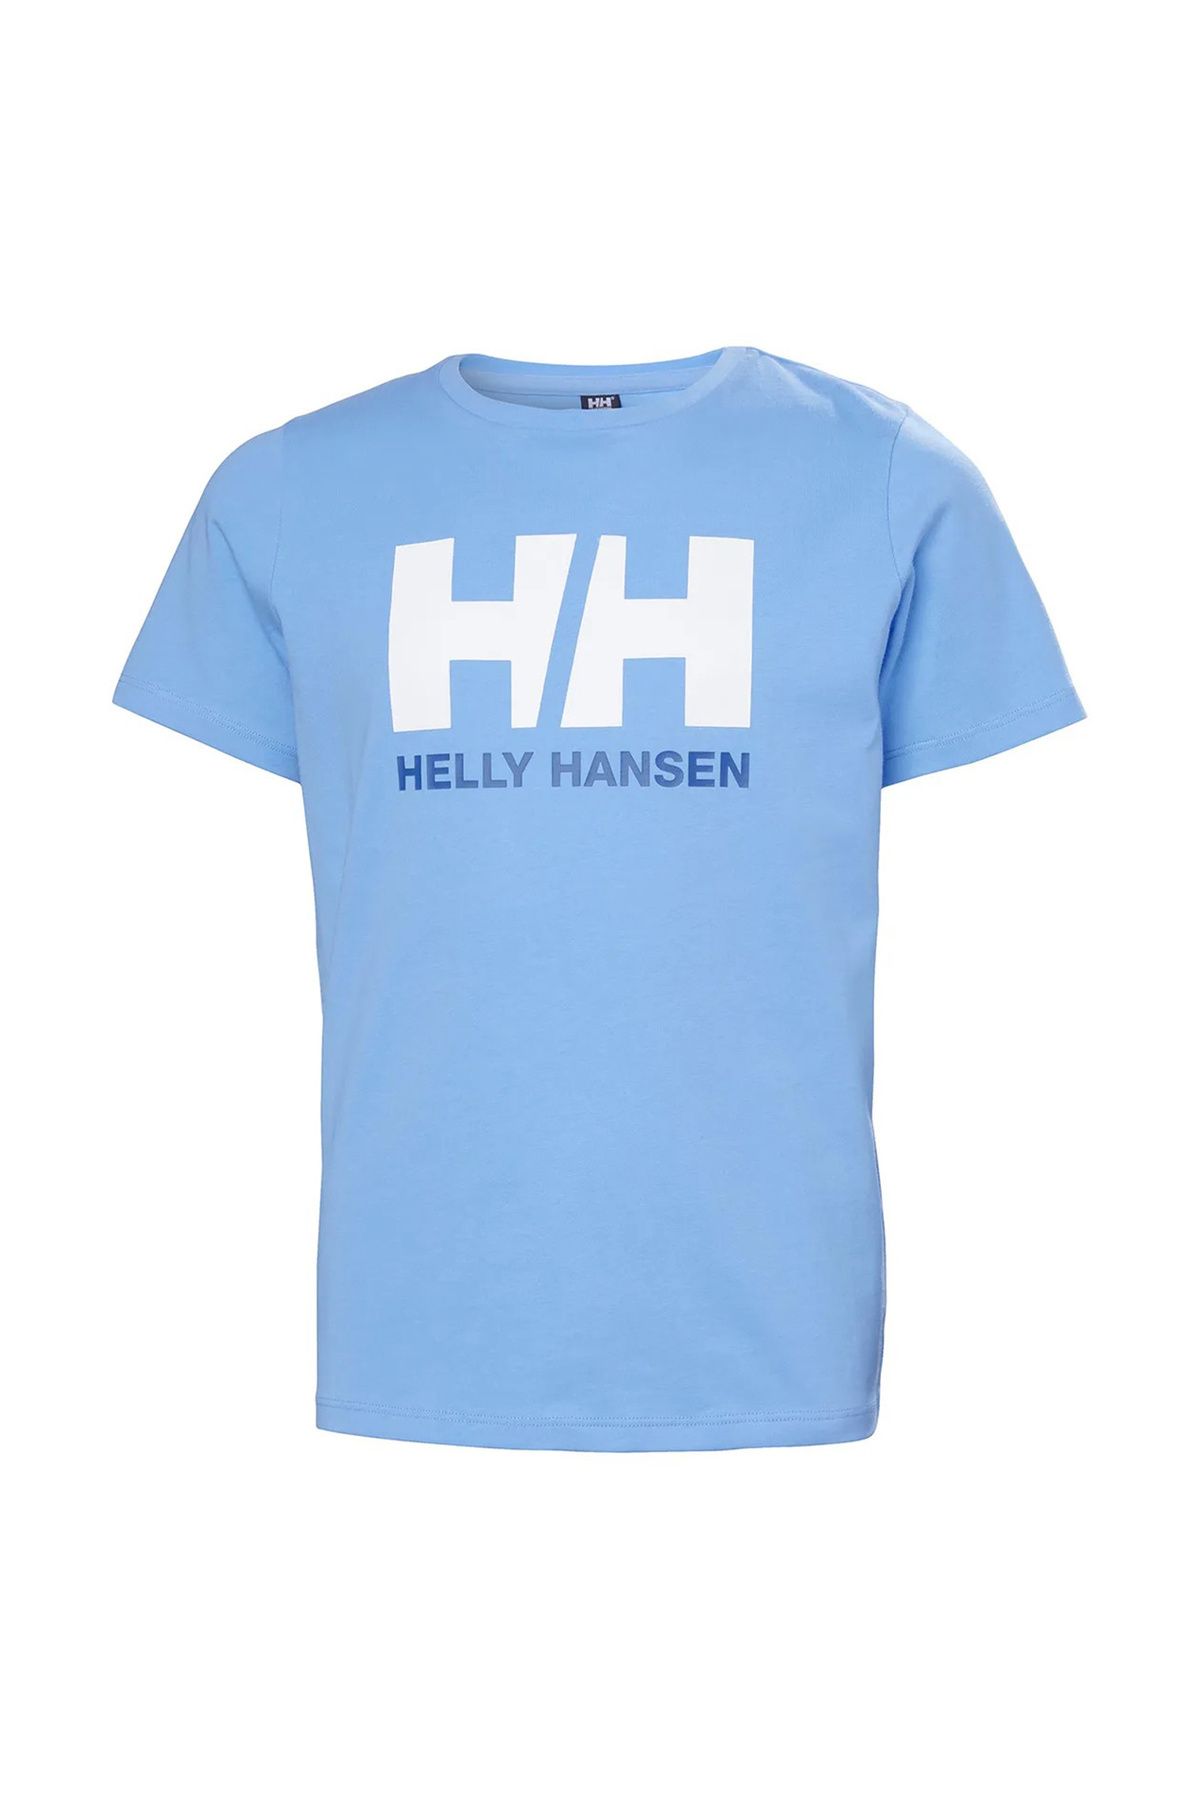 Helly Hansen Açık Mavi Erkek Çocuk Bisiklet Yaka Kısa Kollu T-Shirt BRIGHT BLUE JR HH LOGO T-SHIRT